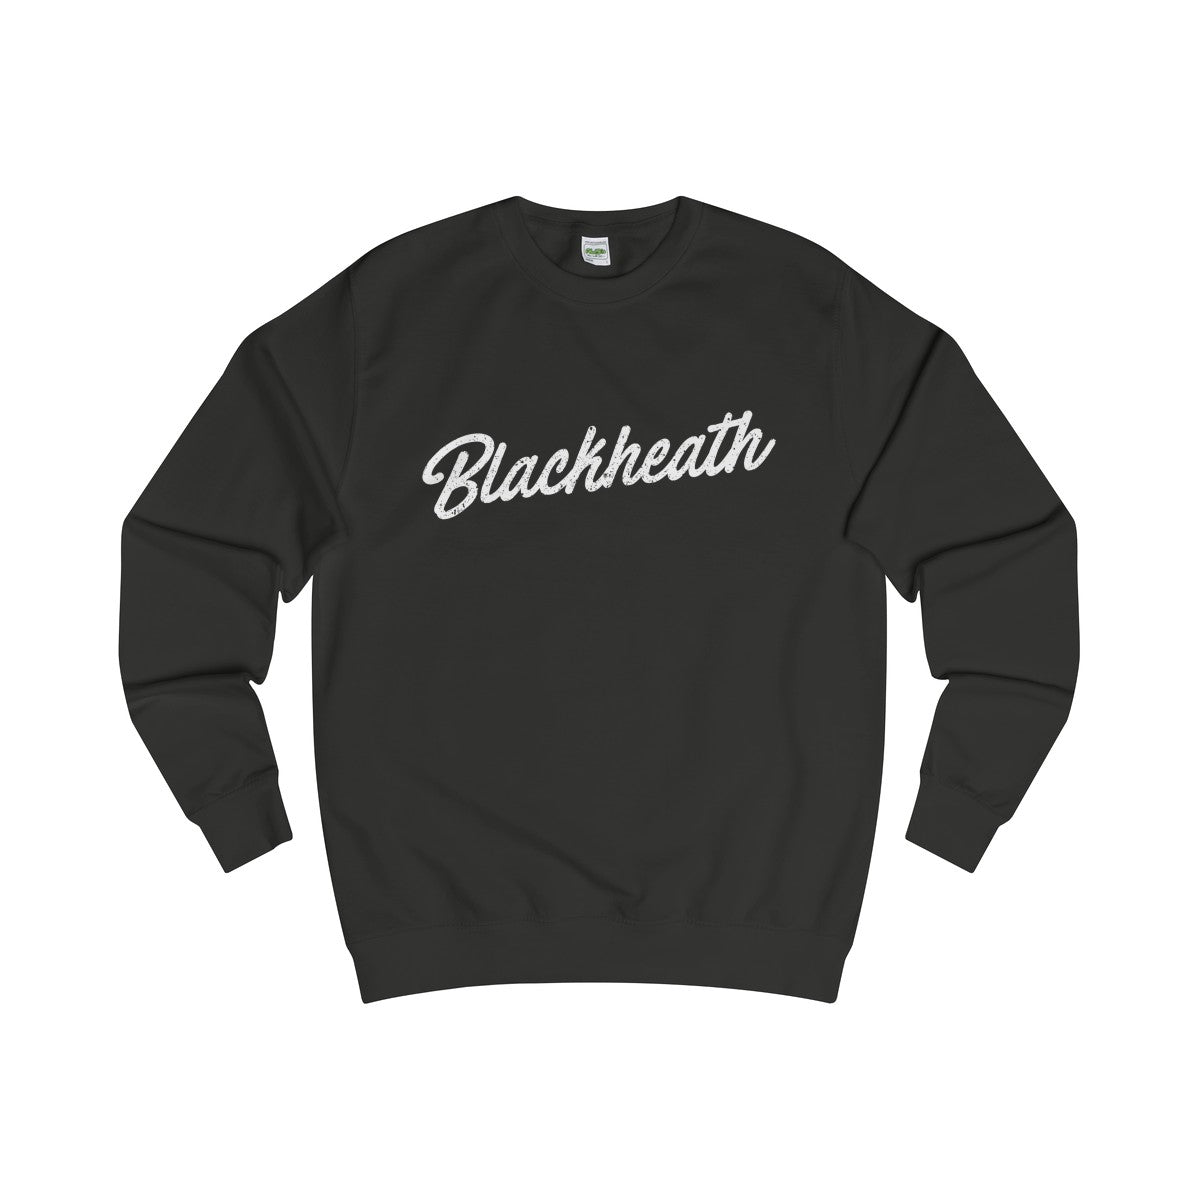 Blackheath Scripted Sweater